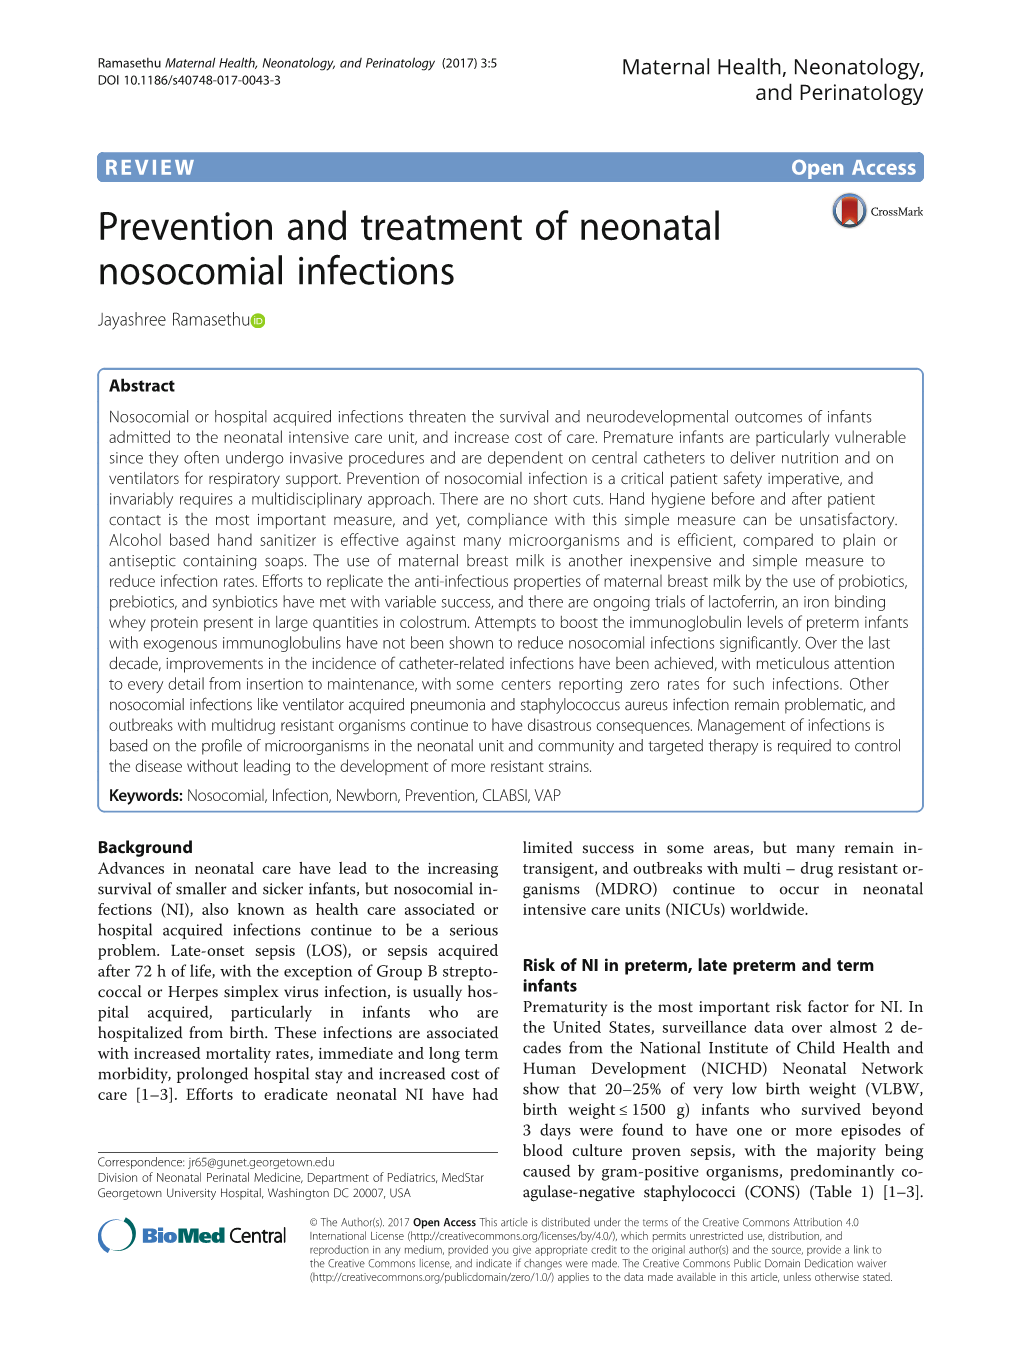 Prevention and Treatment of Neonatal Nosocomial Infections Jayashree Ramasethu